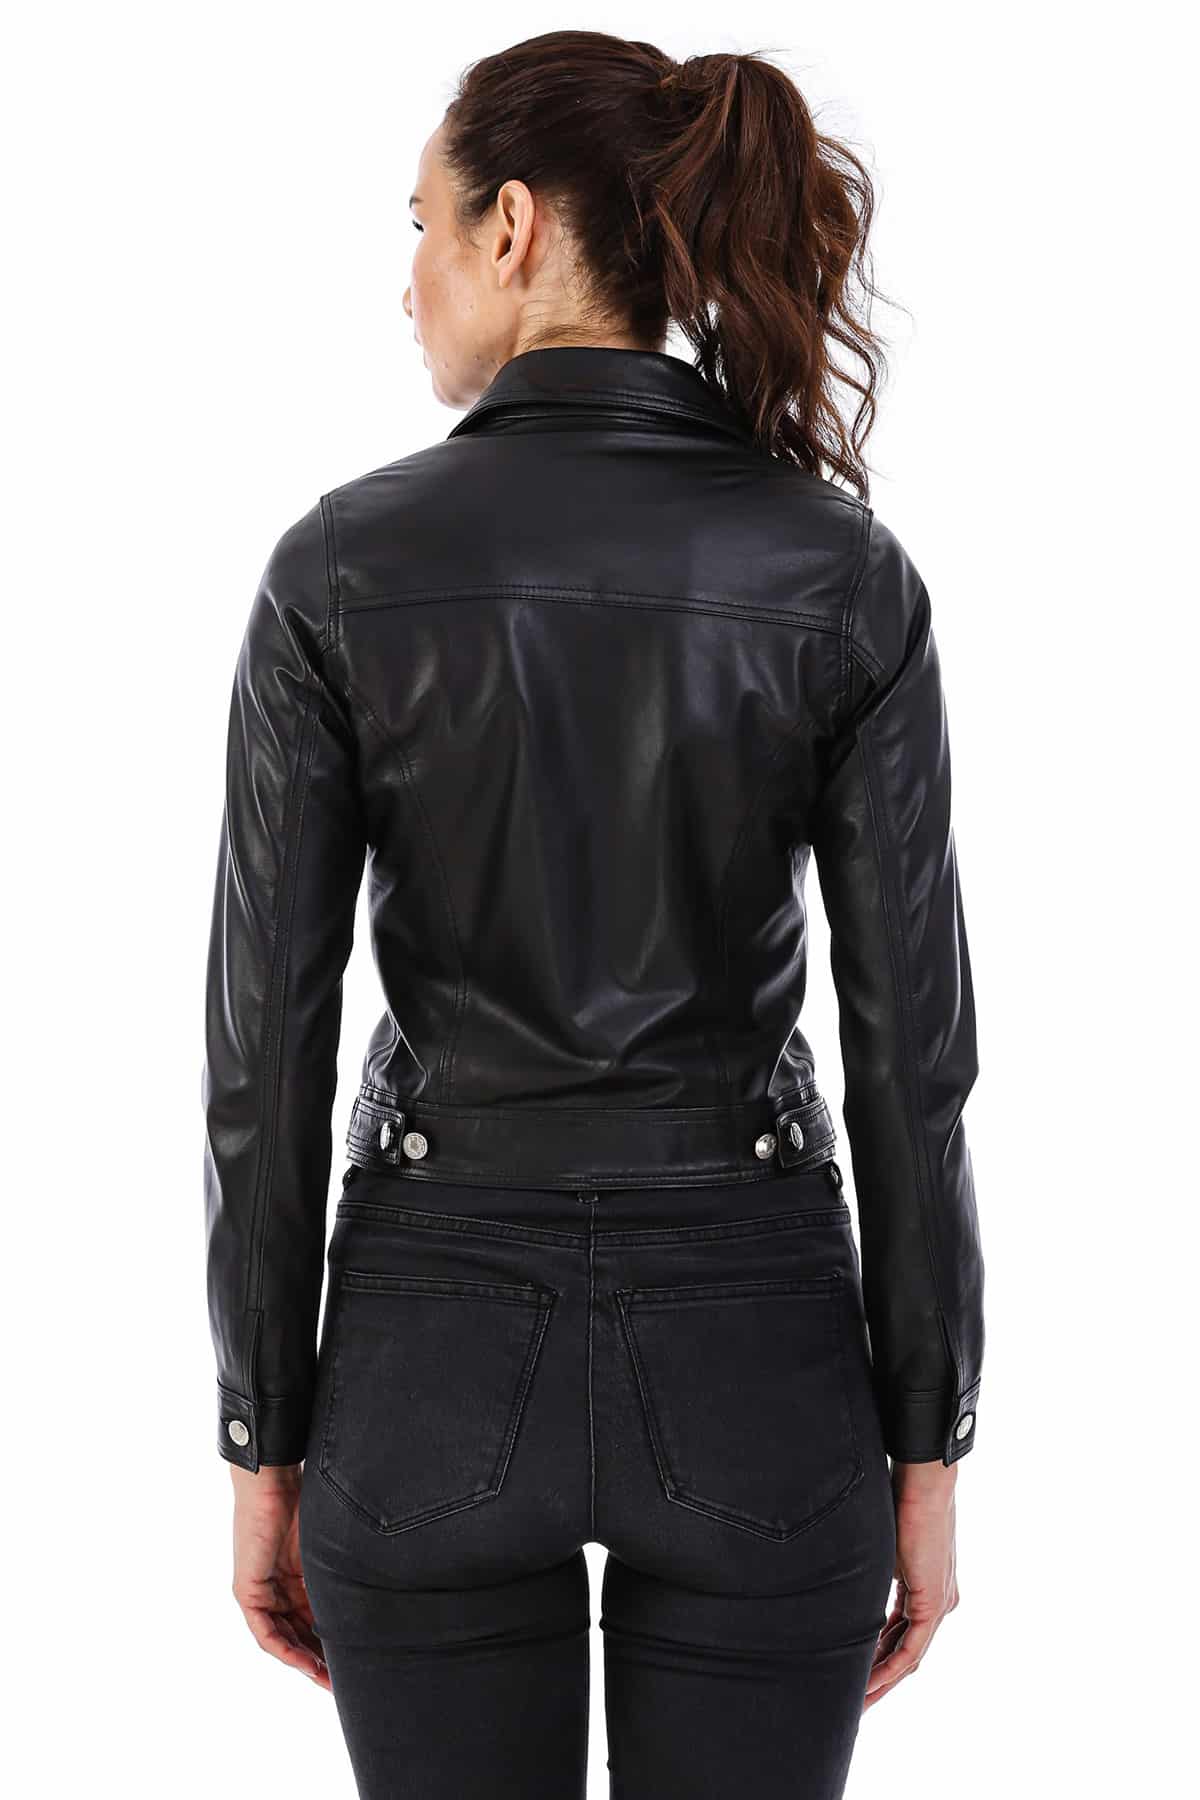 Stamzod Womens Luxury Clothing Cropped Suede Leather Motorcycle Jackets  Comfortable Stylish Zipper Short Jackets Coats Black XL 